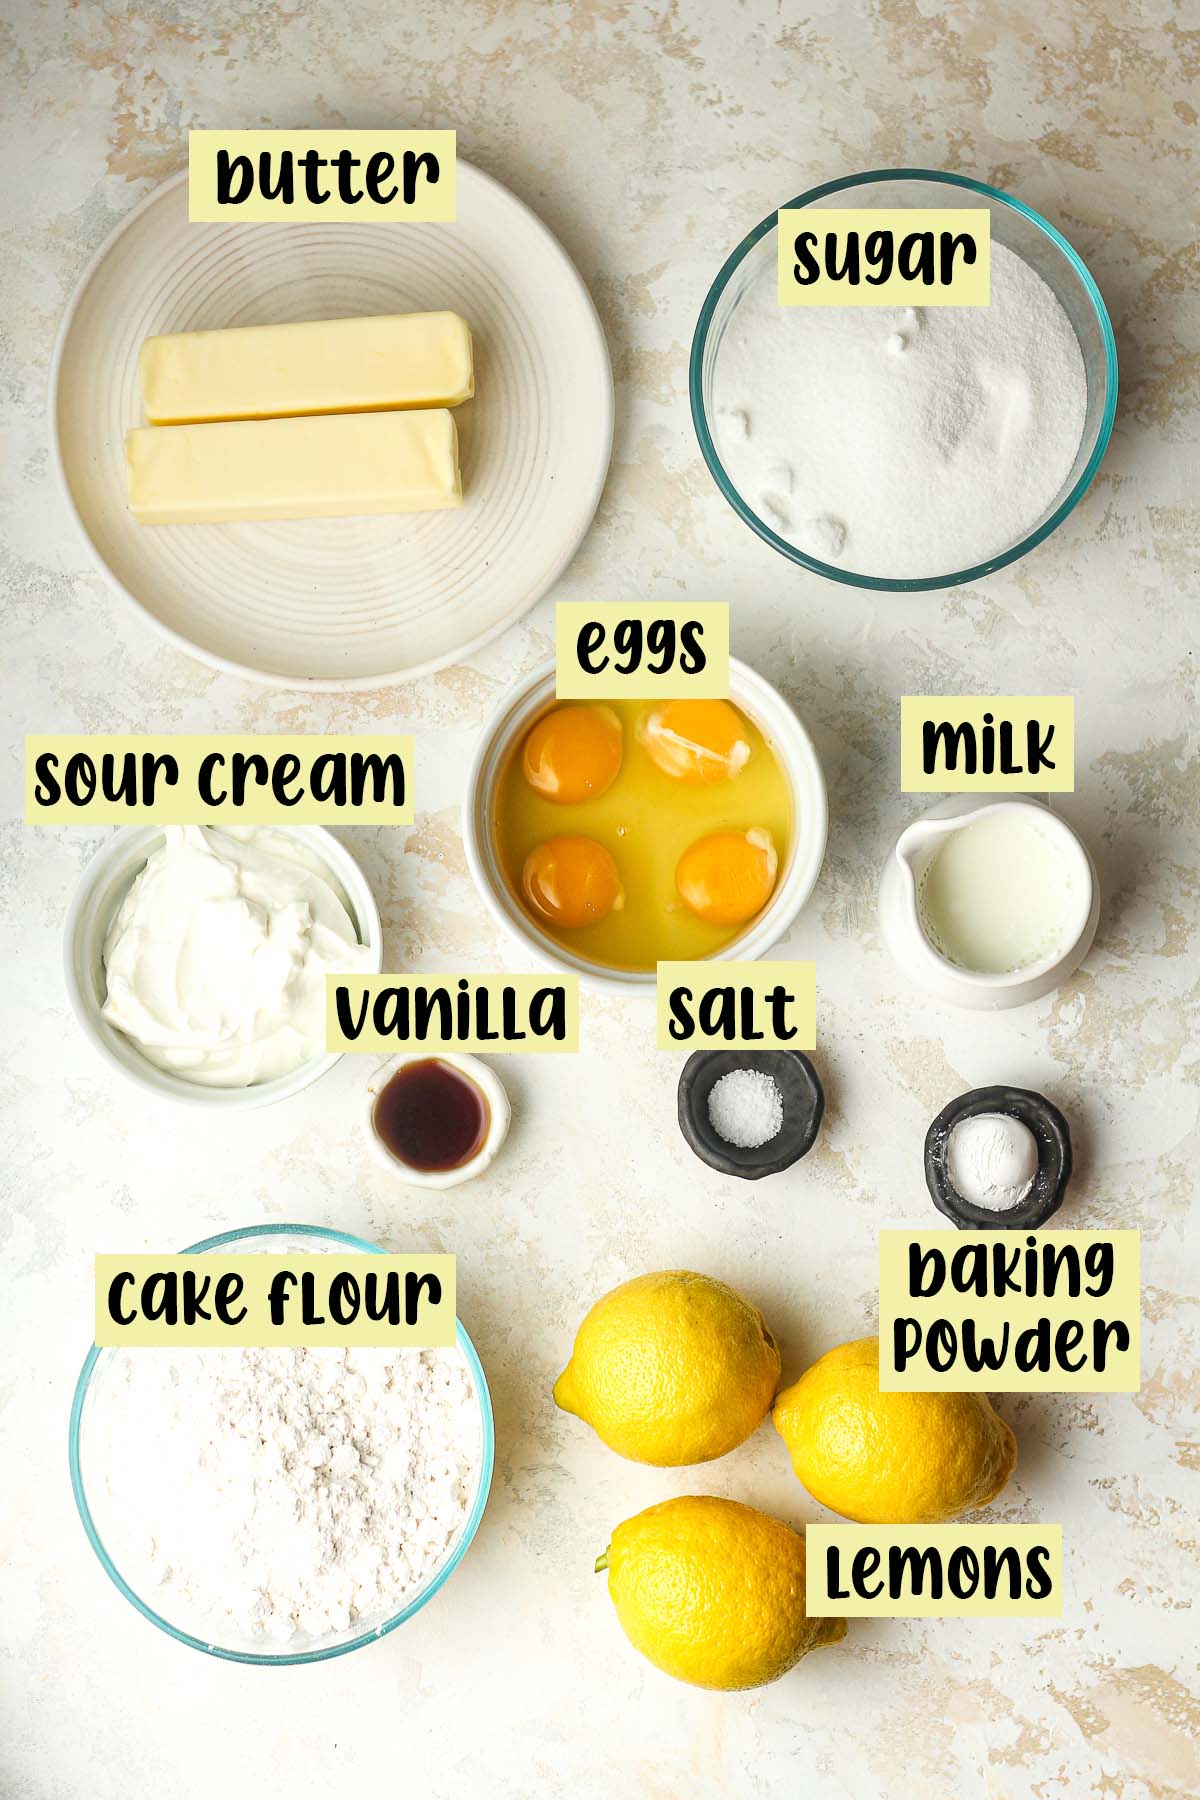 Ingredients for lemon bundt cake.